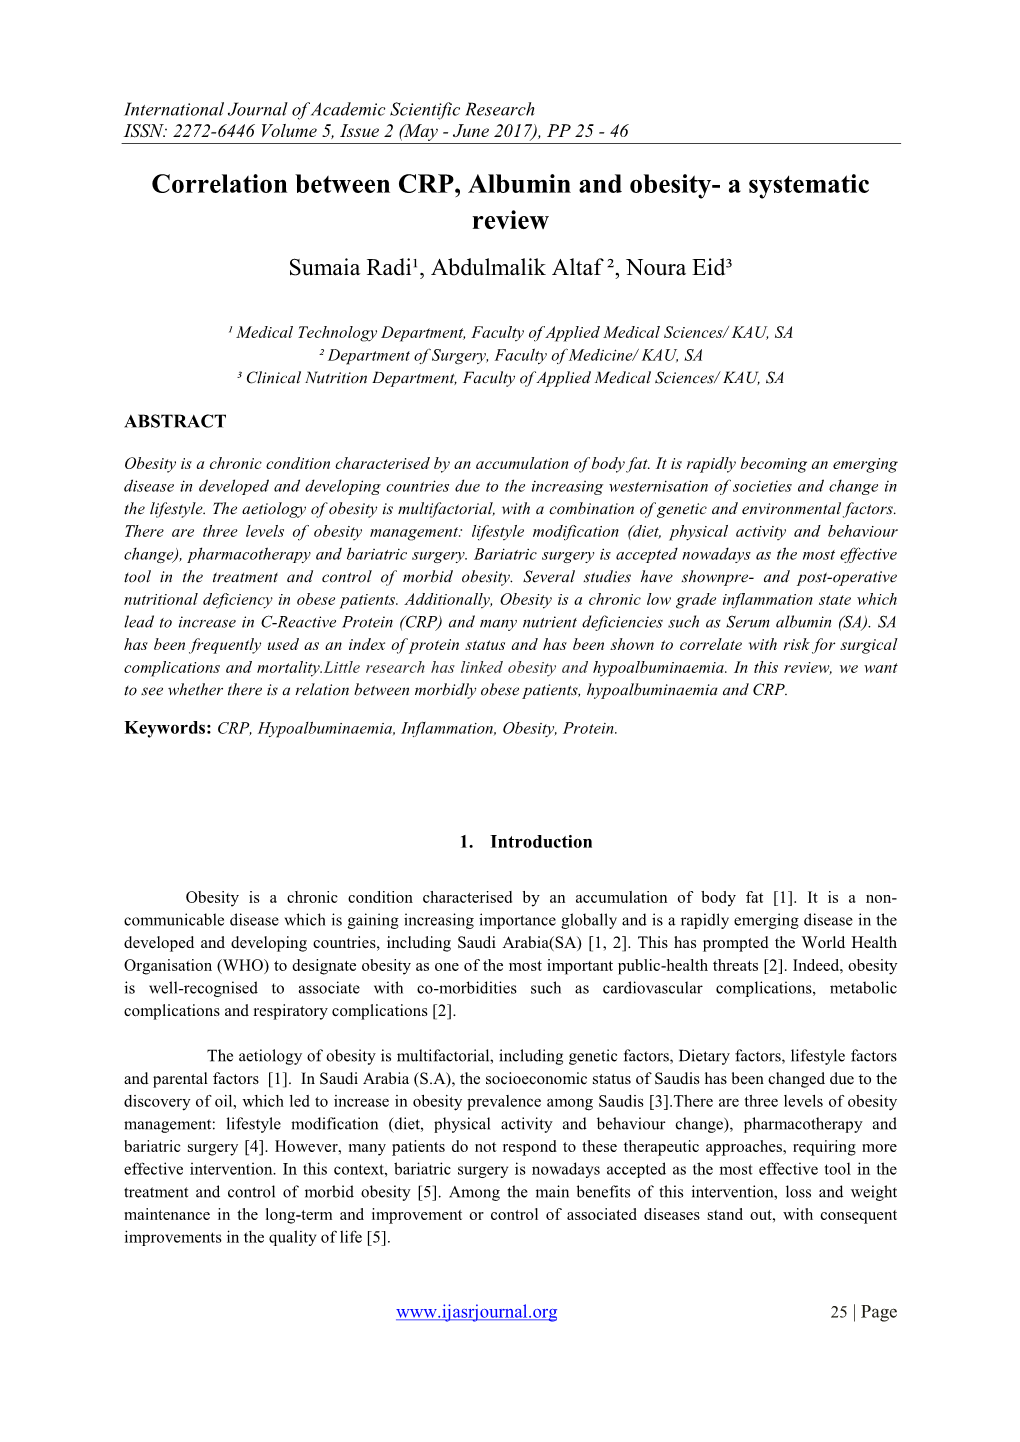 Correlation Between CRP, Albumin and Obesity- a Systematic Review Sumaia Radi¹, Abdulmalik Altaf ², Noura Eid³